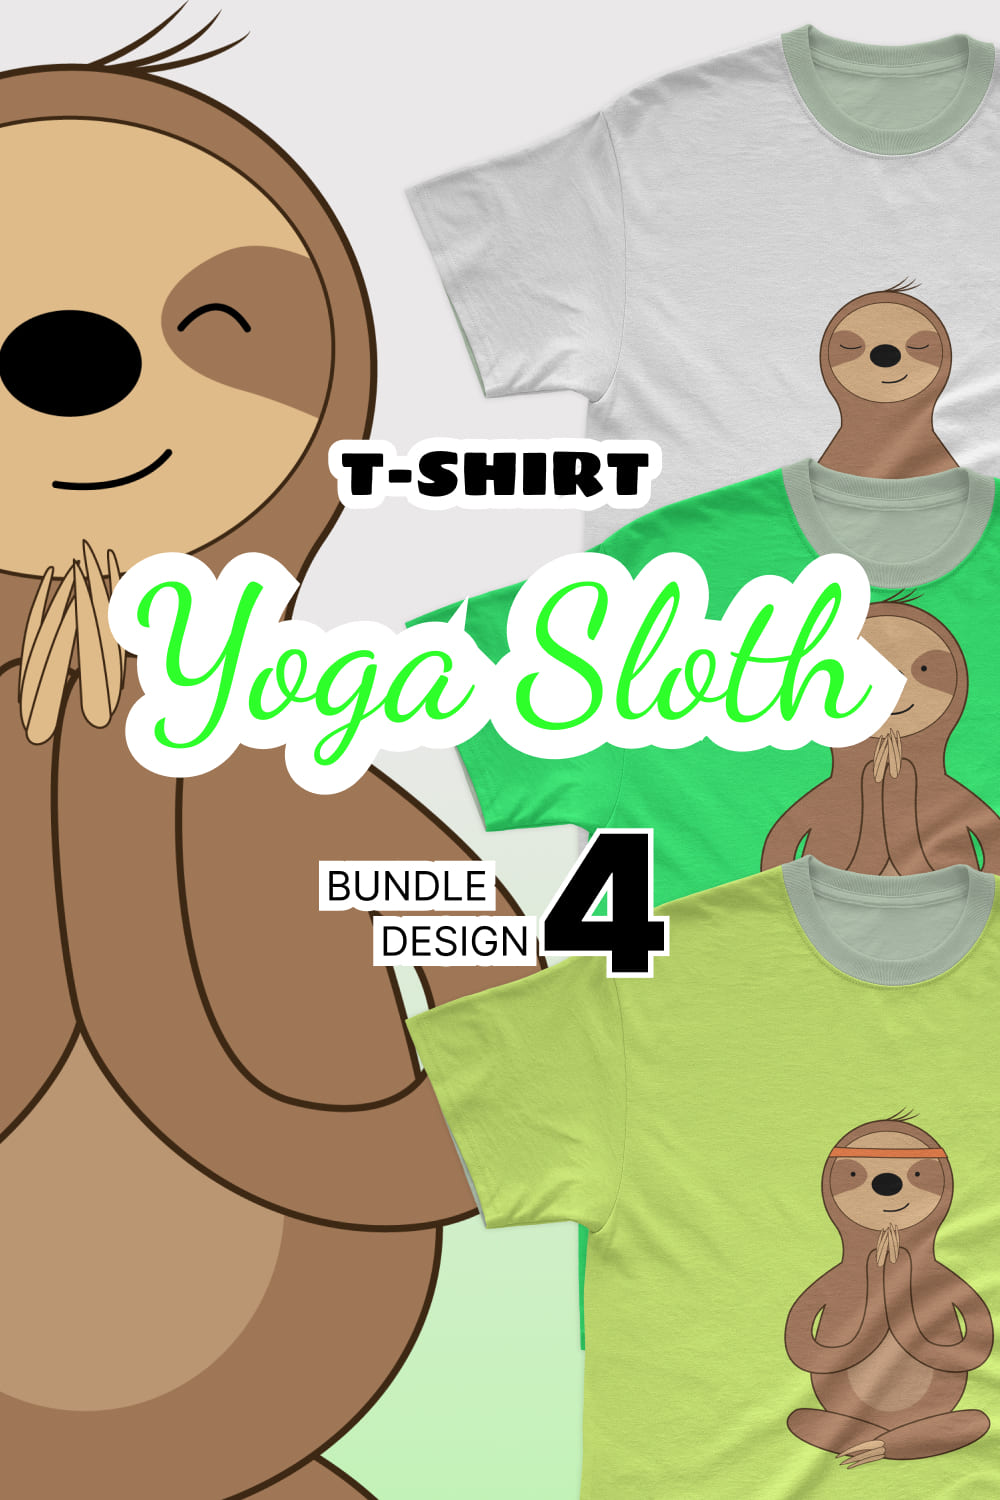 A set of t-shirts with great yogi sloth prints.